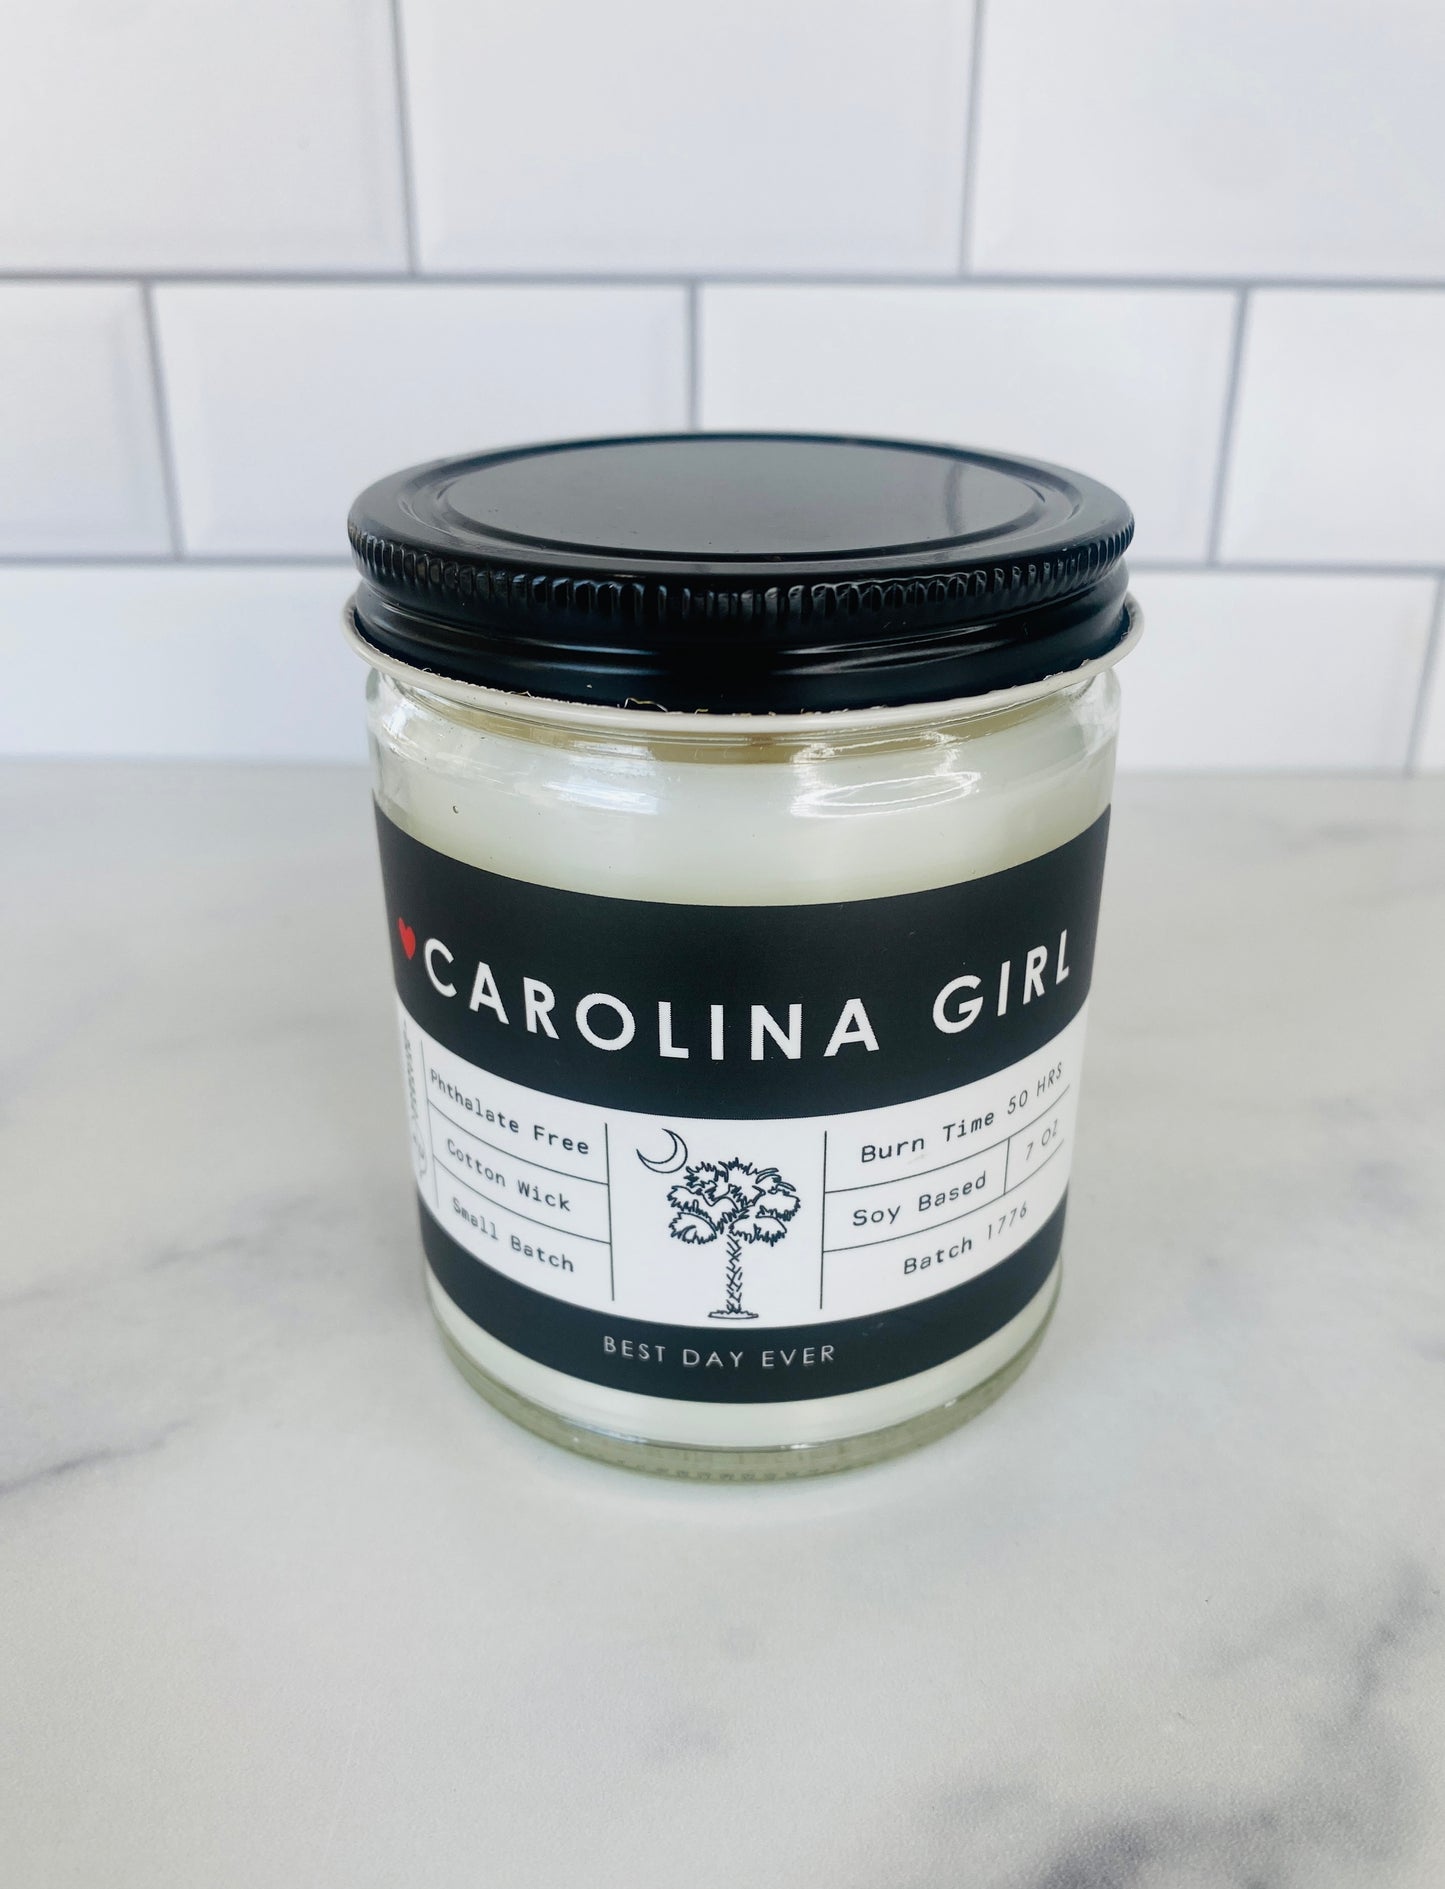 Carolina Girl (South Carolina) Candle